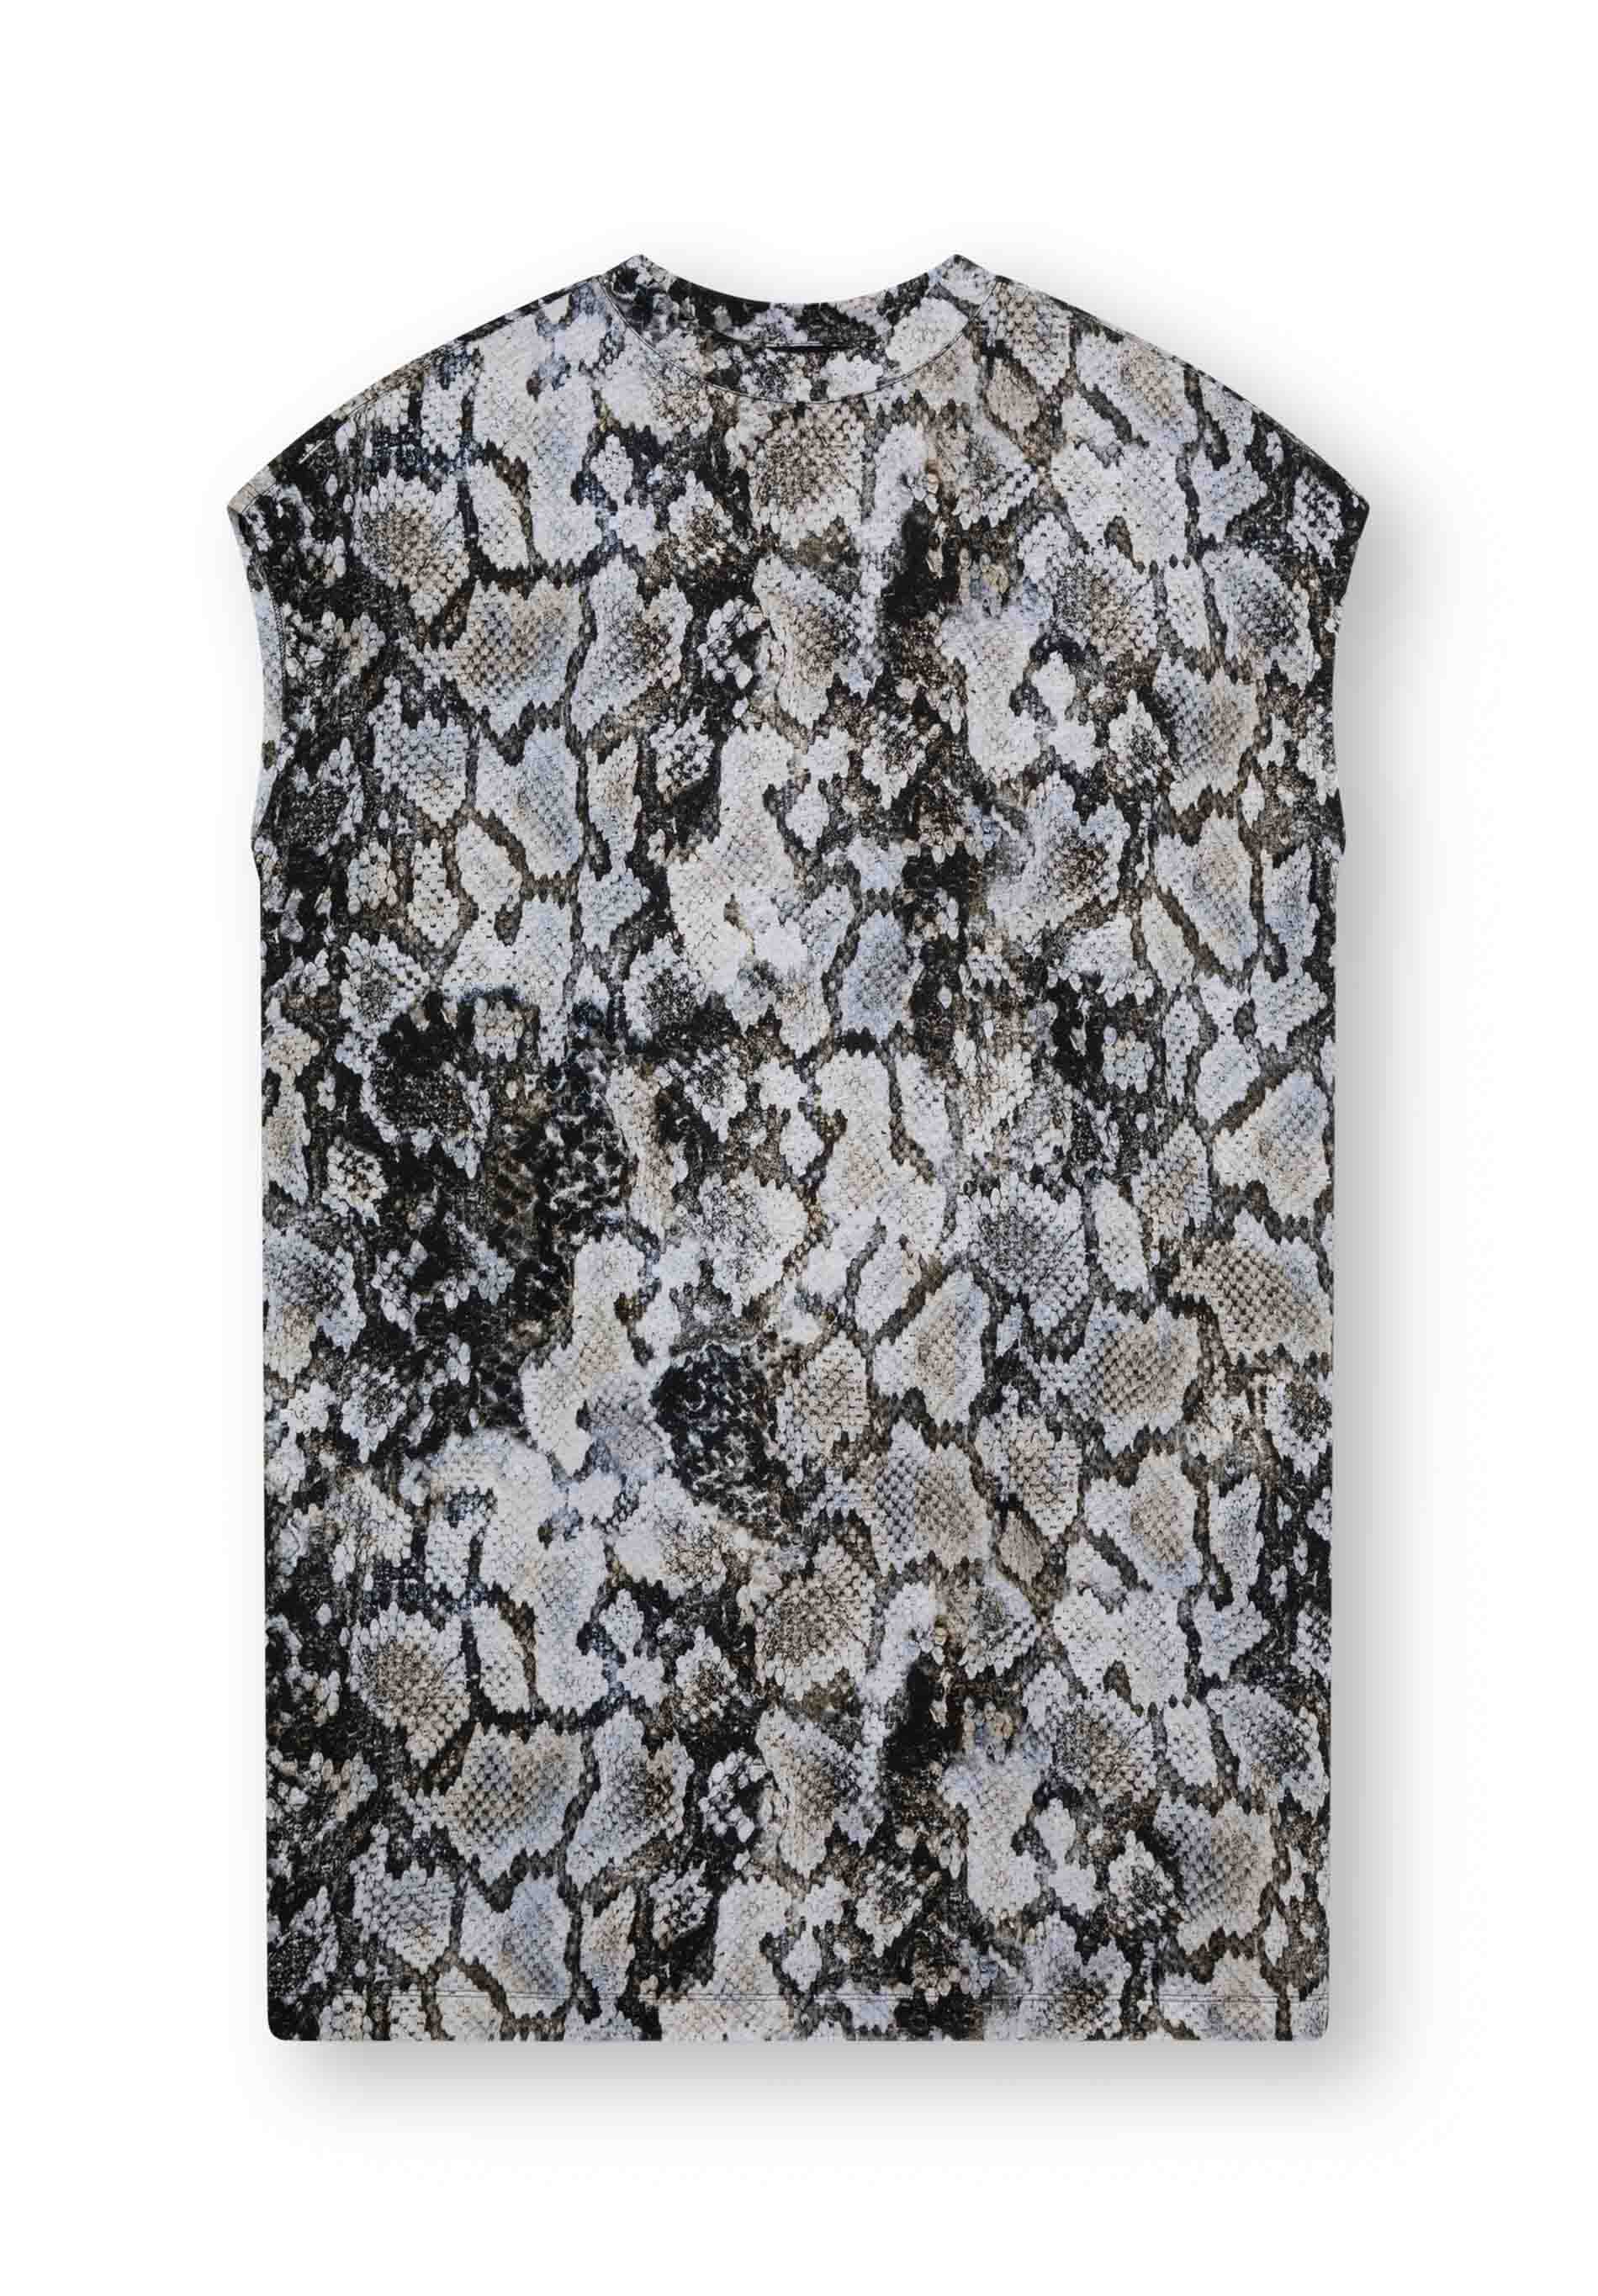 Dress FJELA in animal print by LOVJOI made of organic cotton 